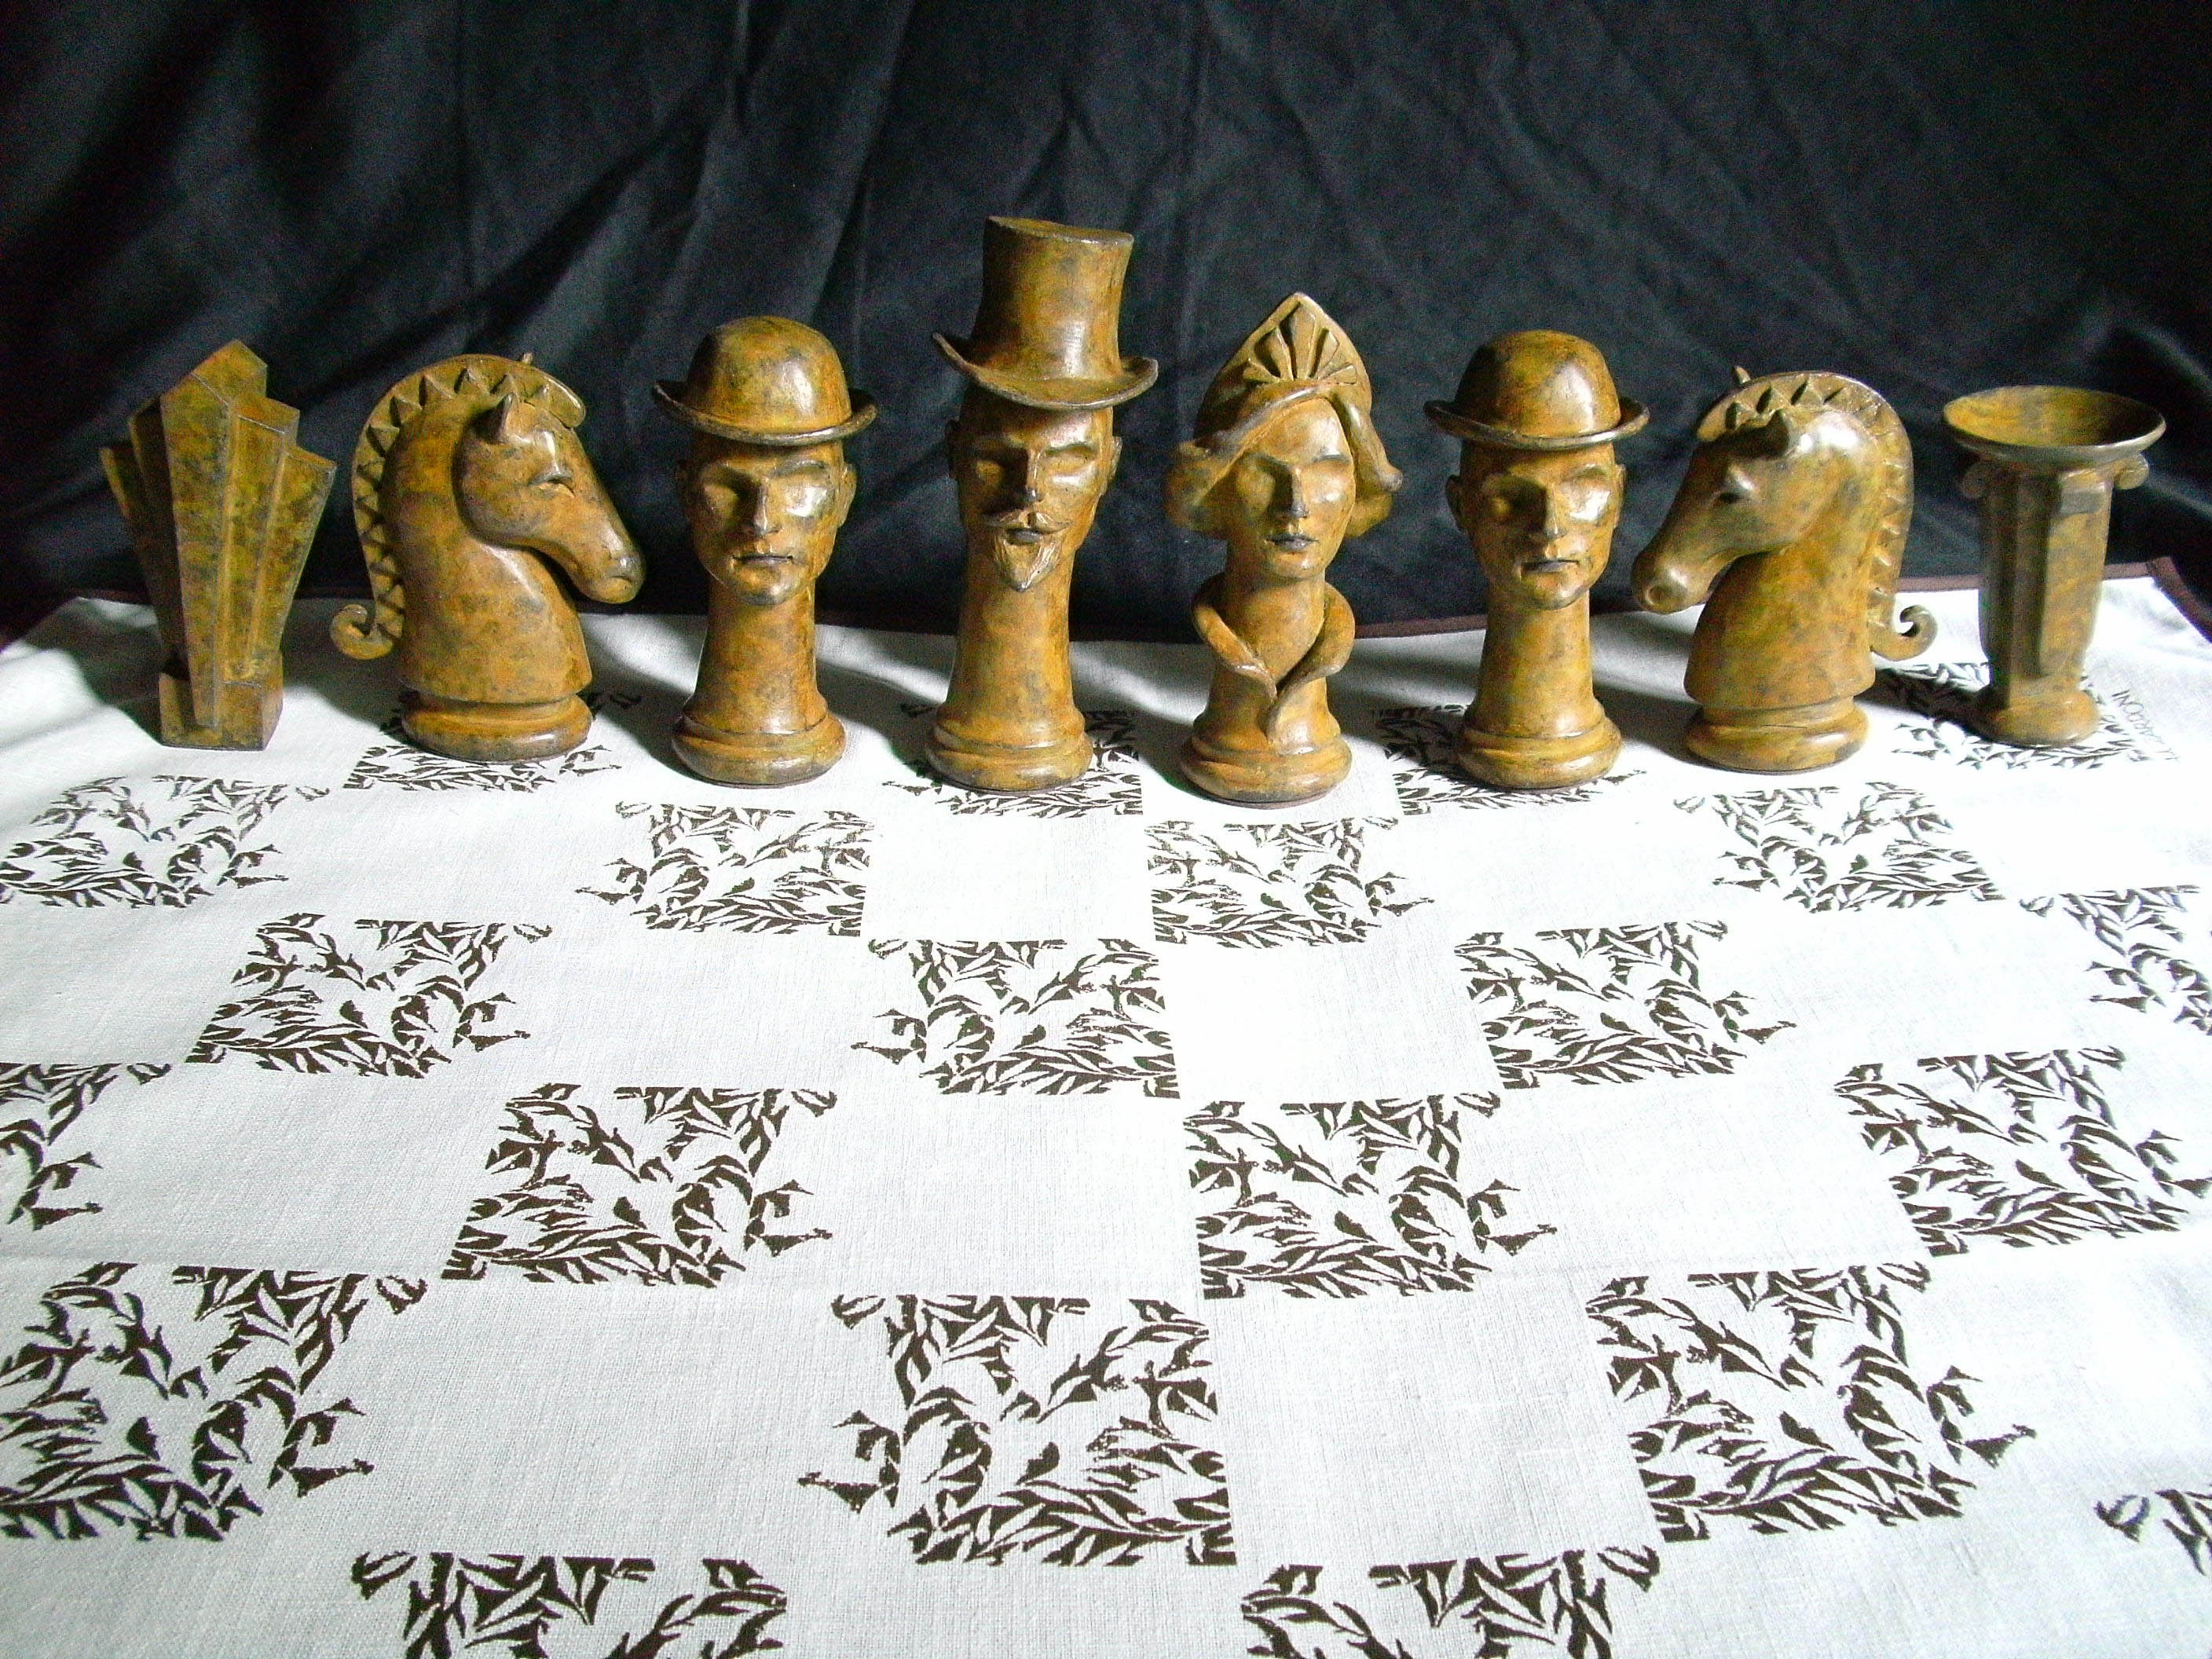 https://0201.nccdn.net/1_2/000/000/117/03f/Zardoni_Alvaro_Chess_Set_01-2816x2112.jpg